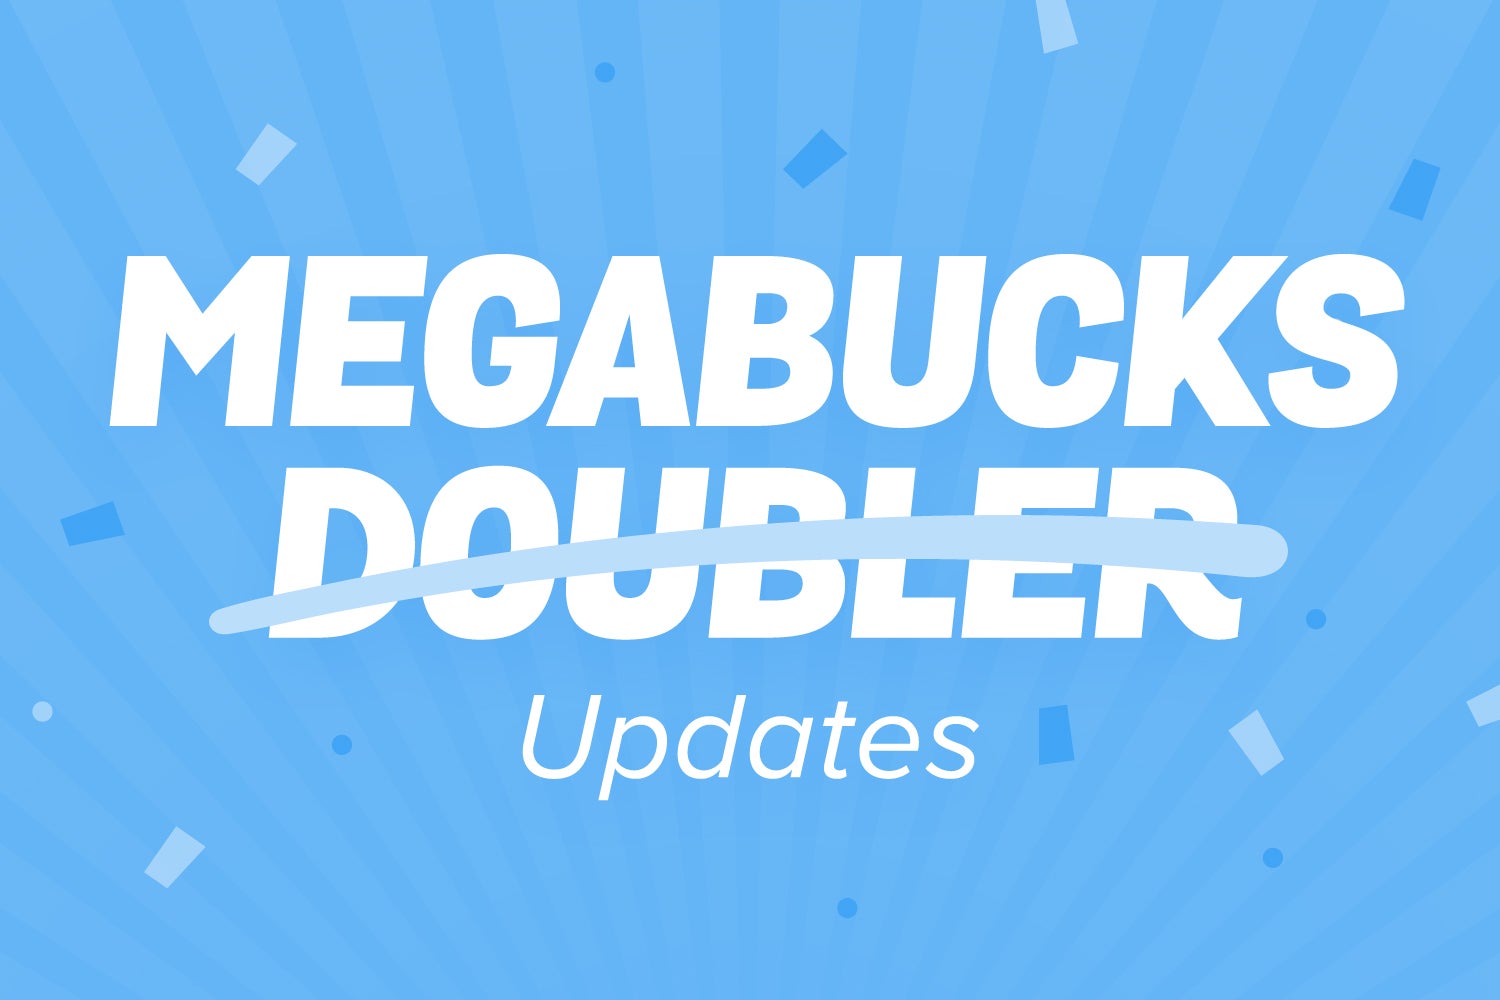 MA Megabucks game updates